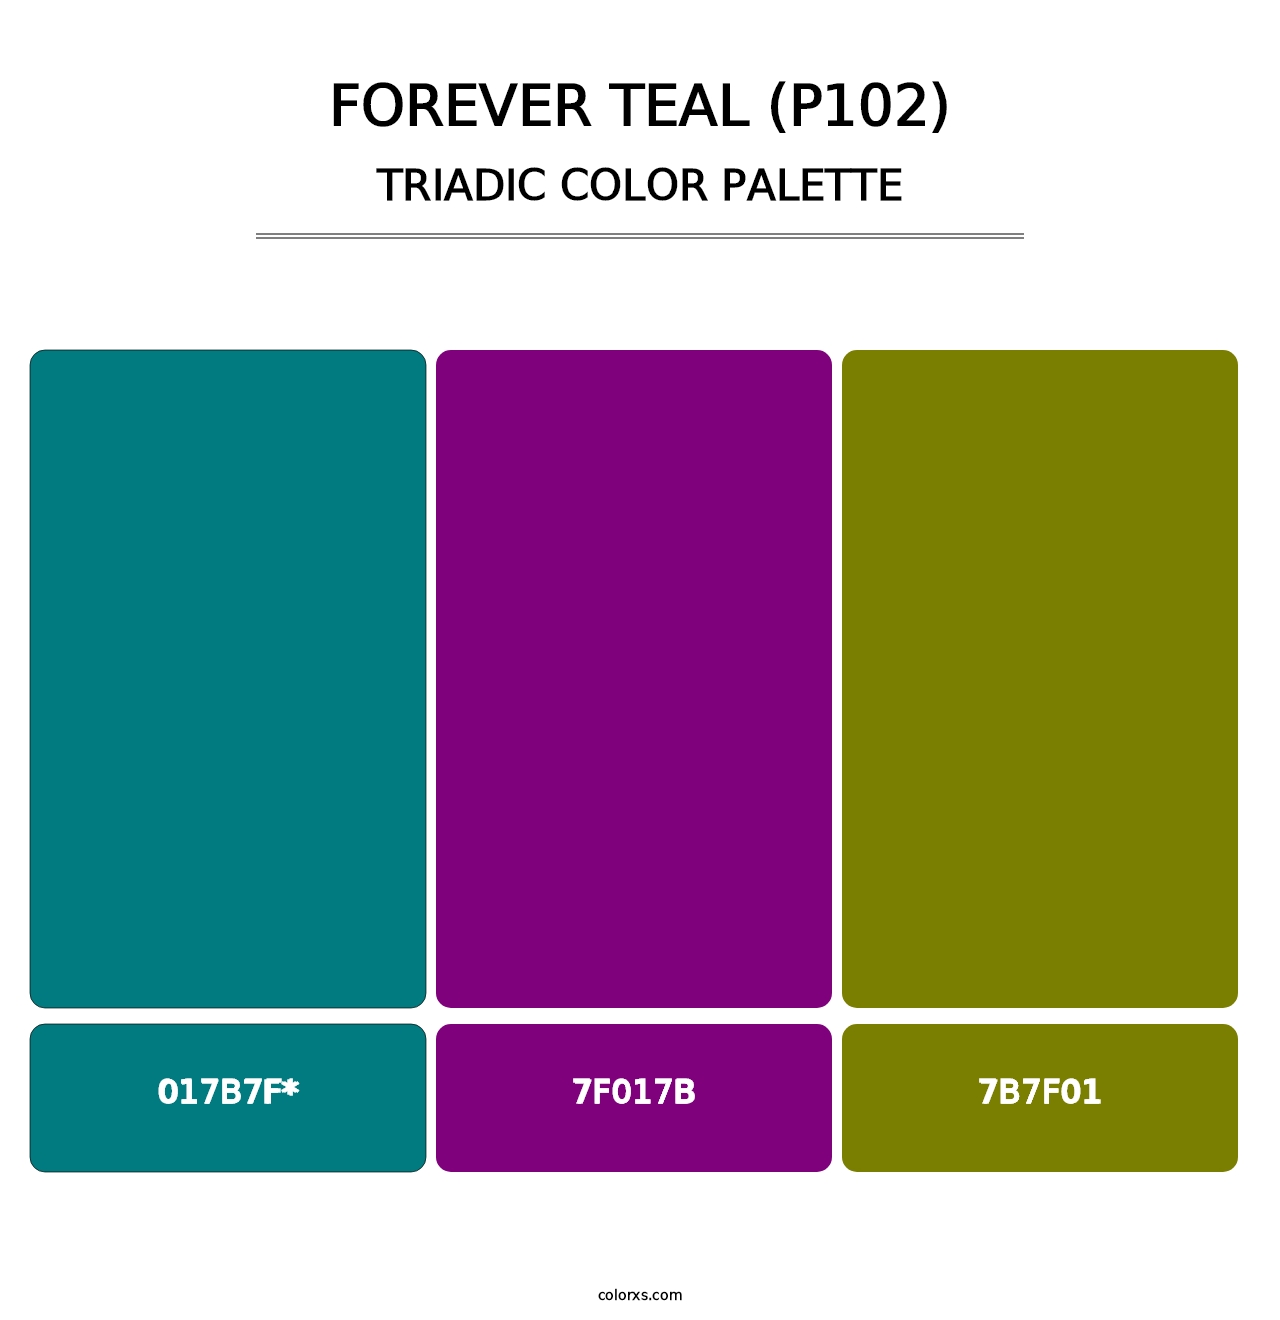 Forever Teal (P102) - Triadic Color Palette